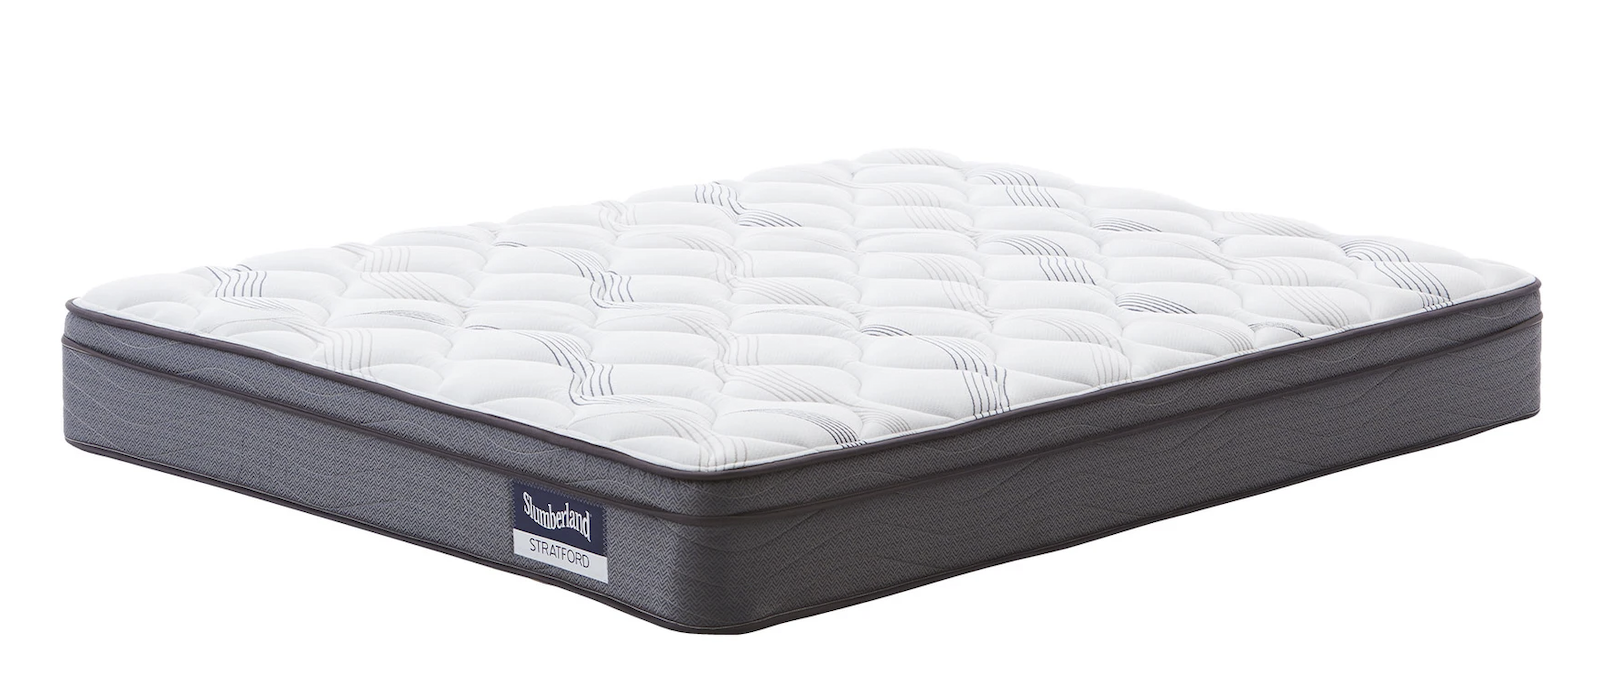 slumberland stratford mattress plush